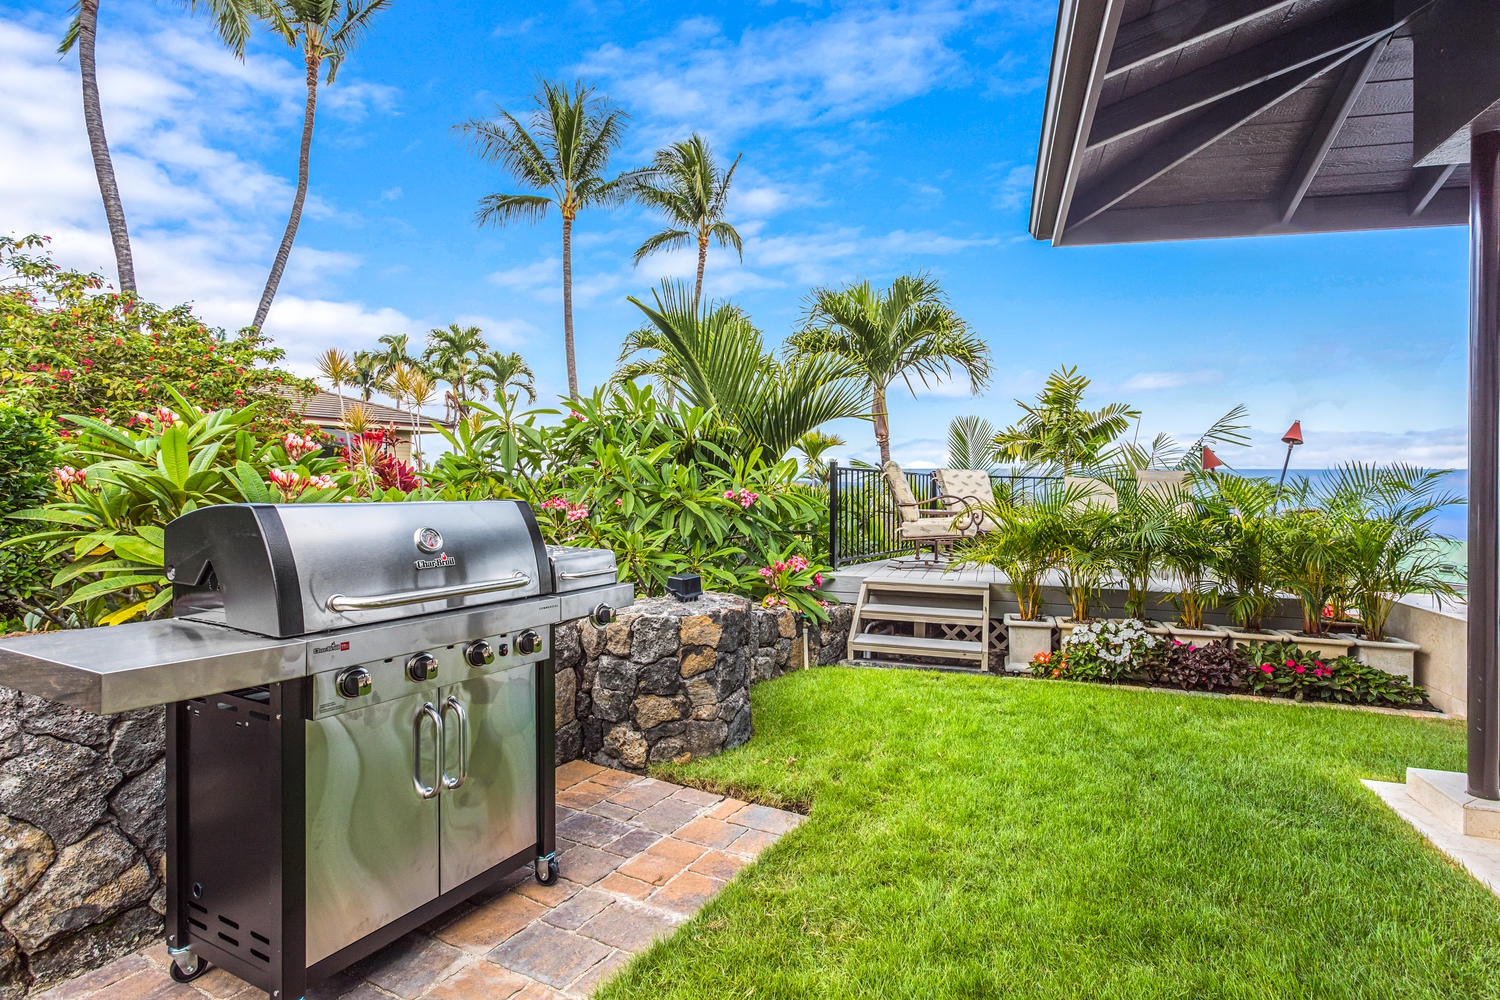 Kailua Kona Vacation Rentals, Ohana le'ale'a - Backyard grilling with gorgeous landscape views